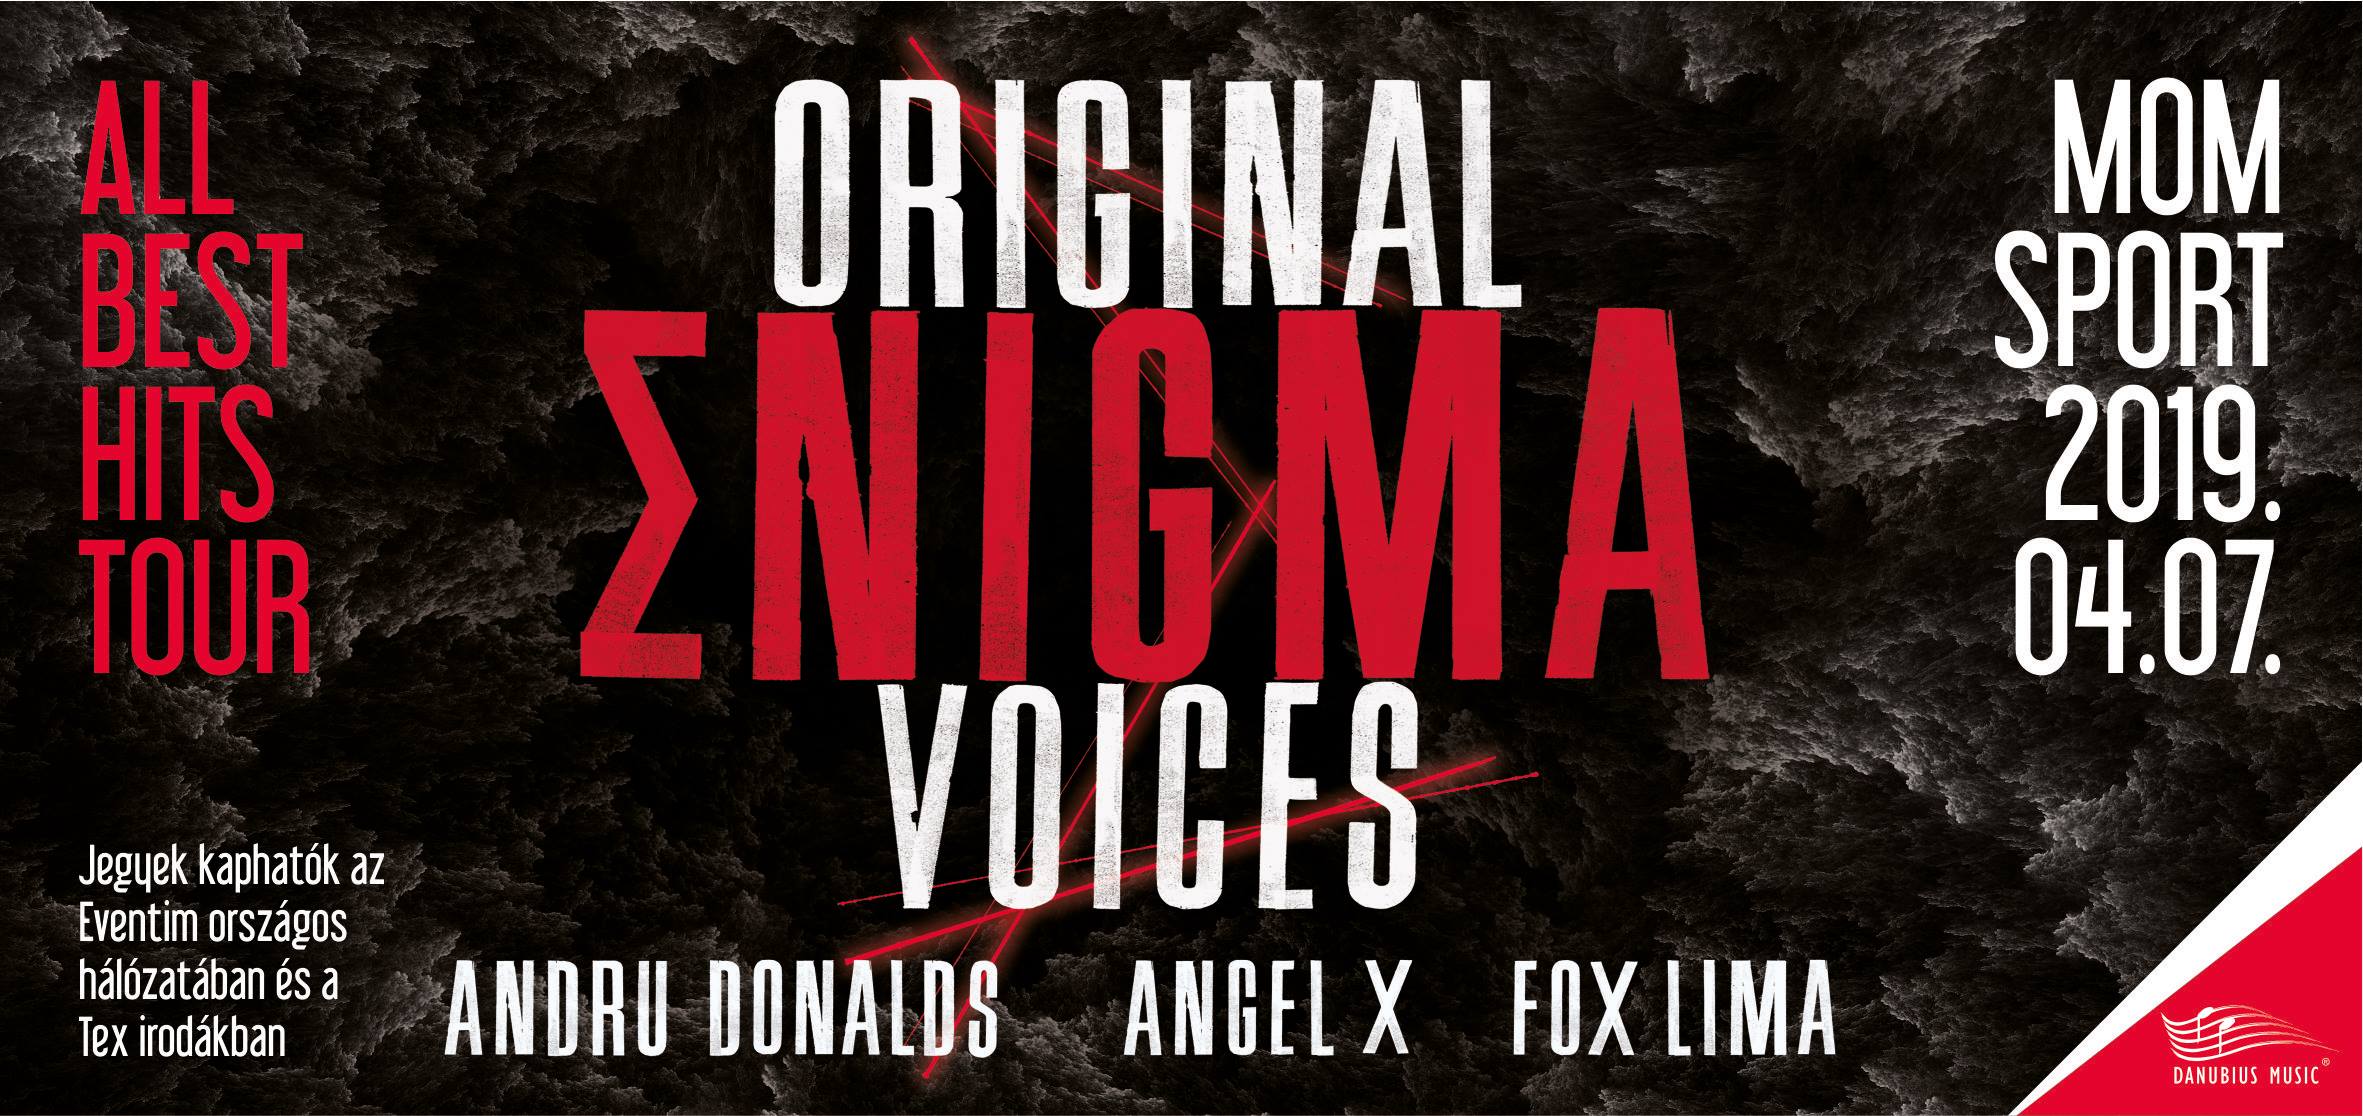 Original Enigma Voices To Come To Budapest, 7 April